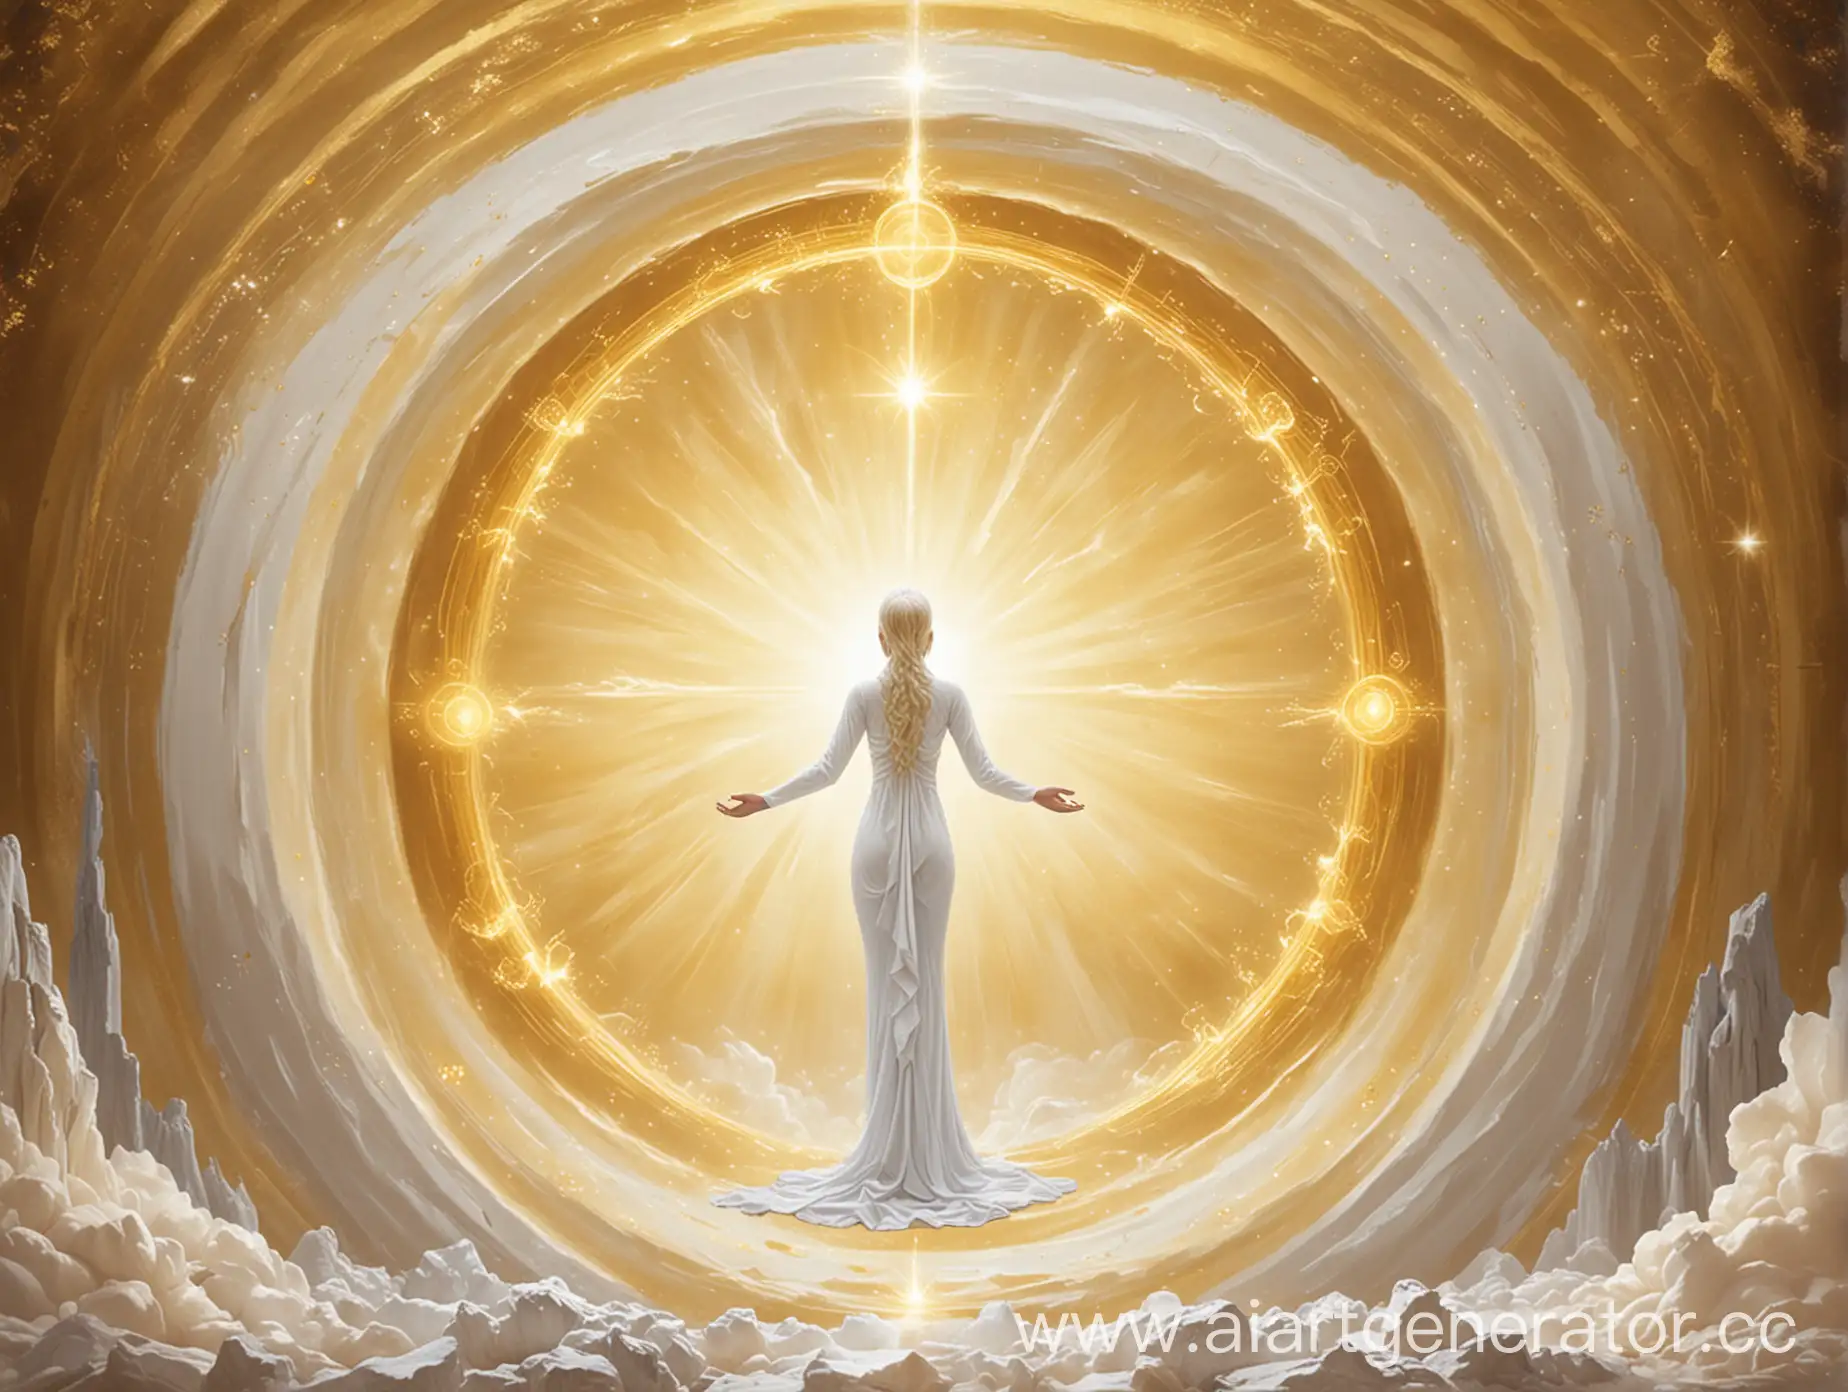 Enlightenment-and-Soul-Healing-Golden-Portal-of-Higher-Wisdom